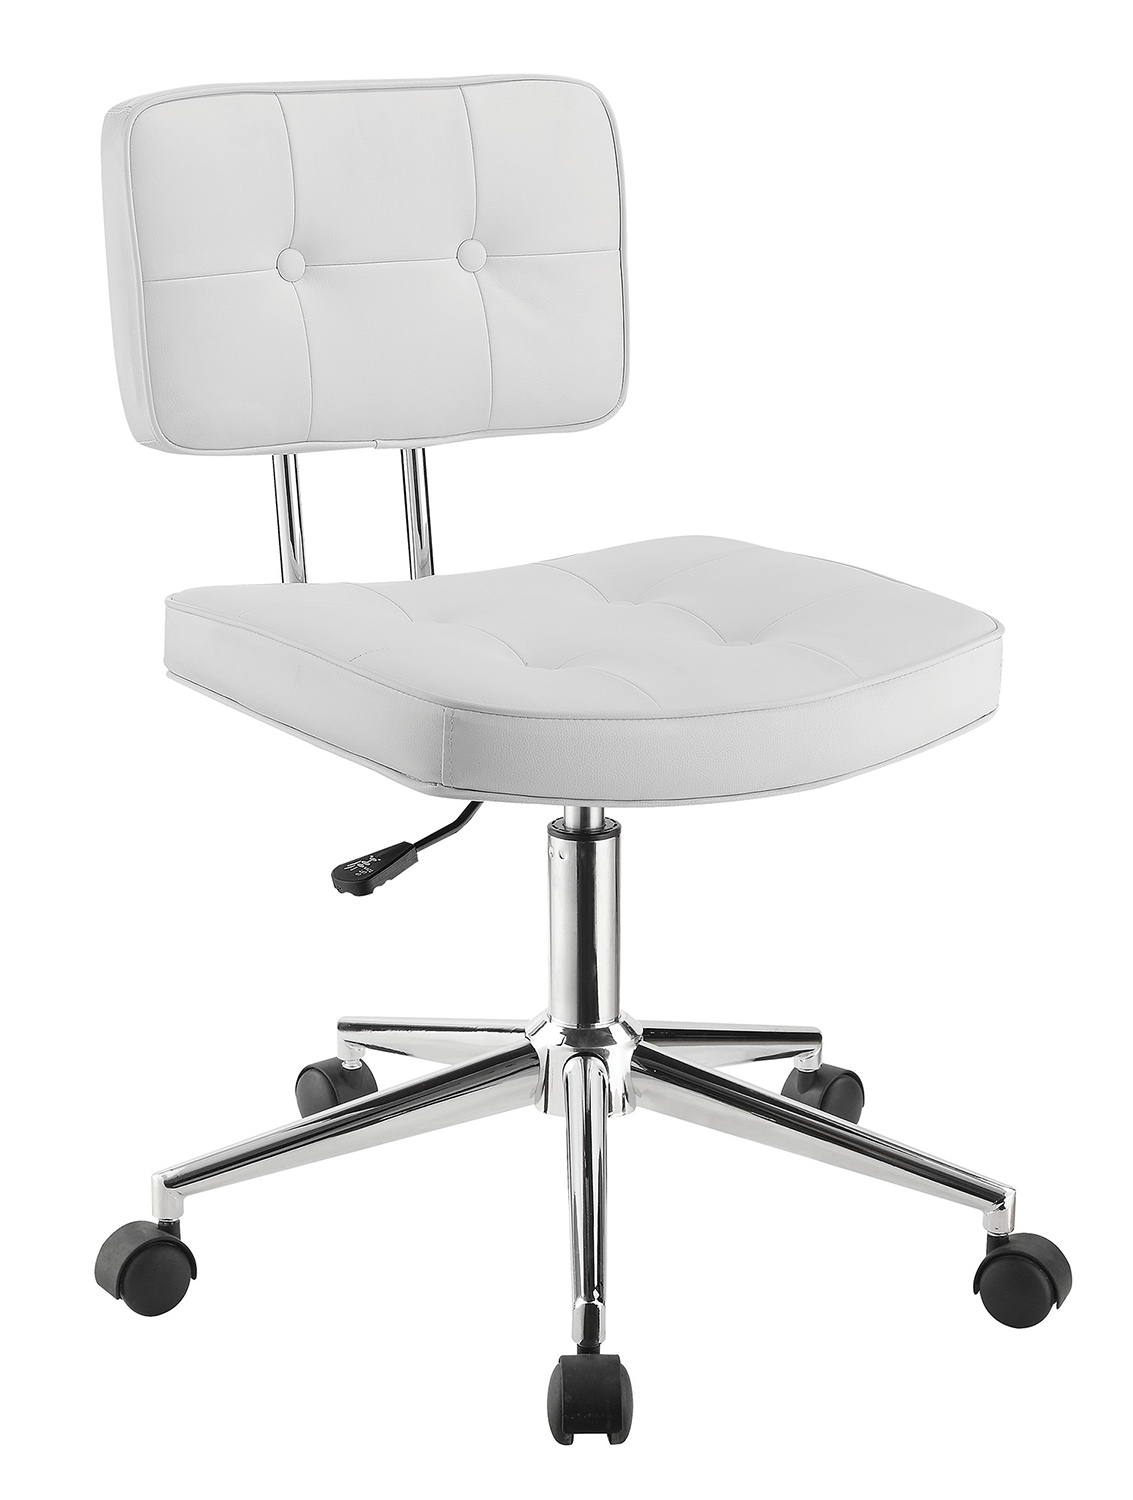 Coaster 802289 Office Chair - White/Chrome